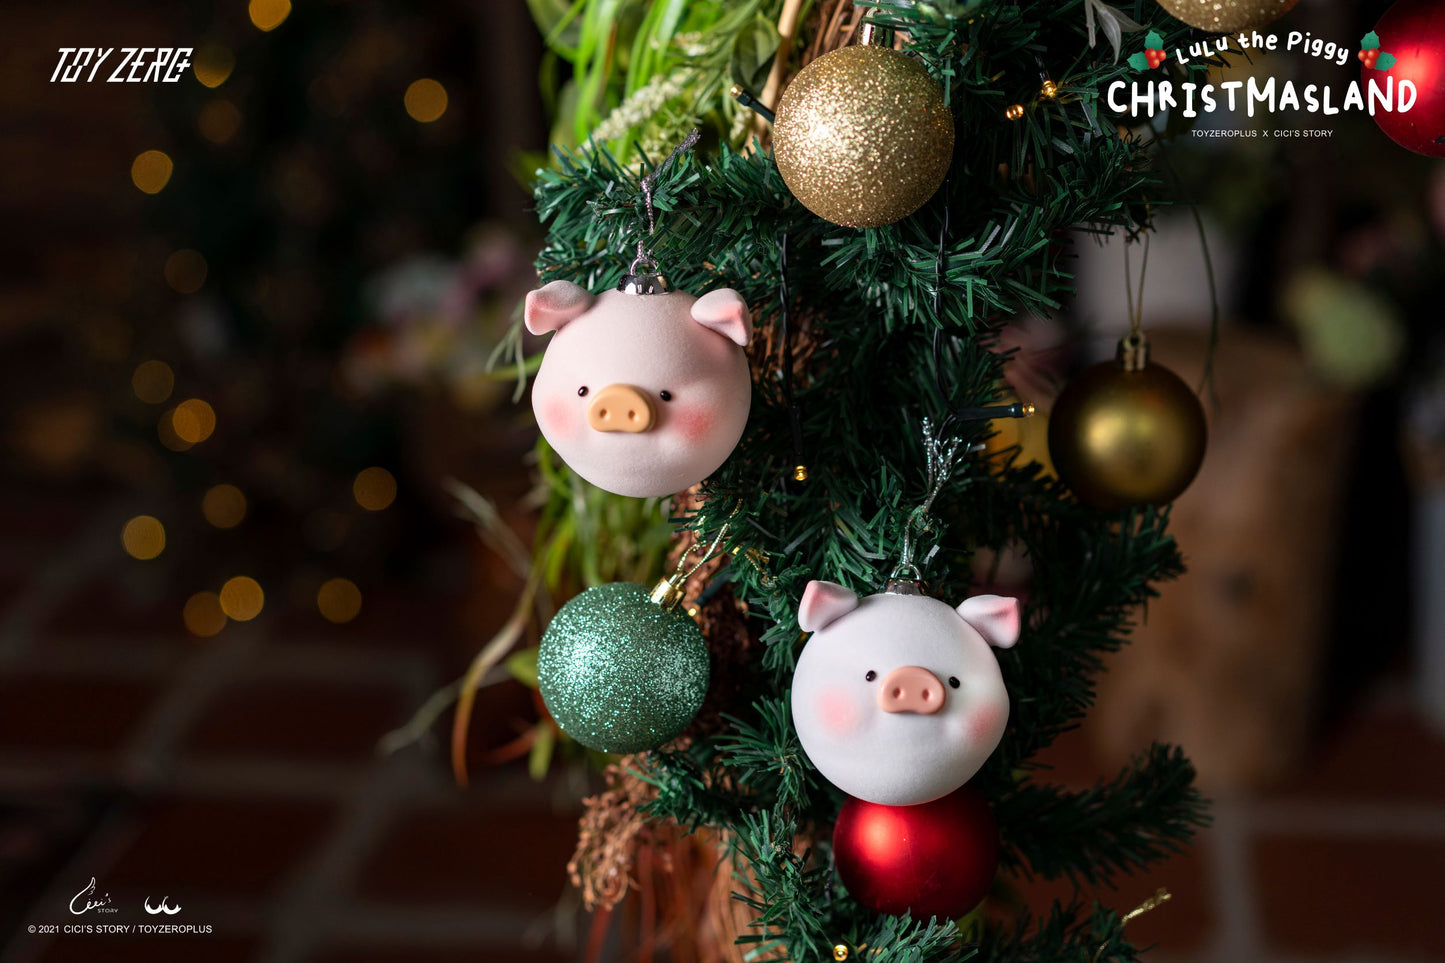 Lulu the Piggy Christmasland Ornament - Snowman Version